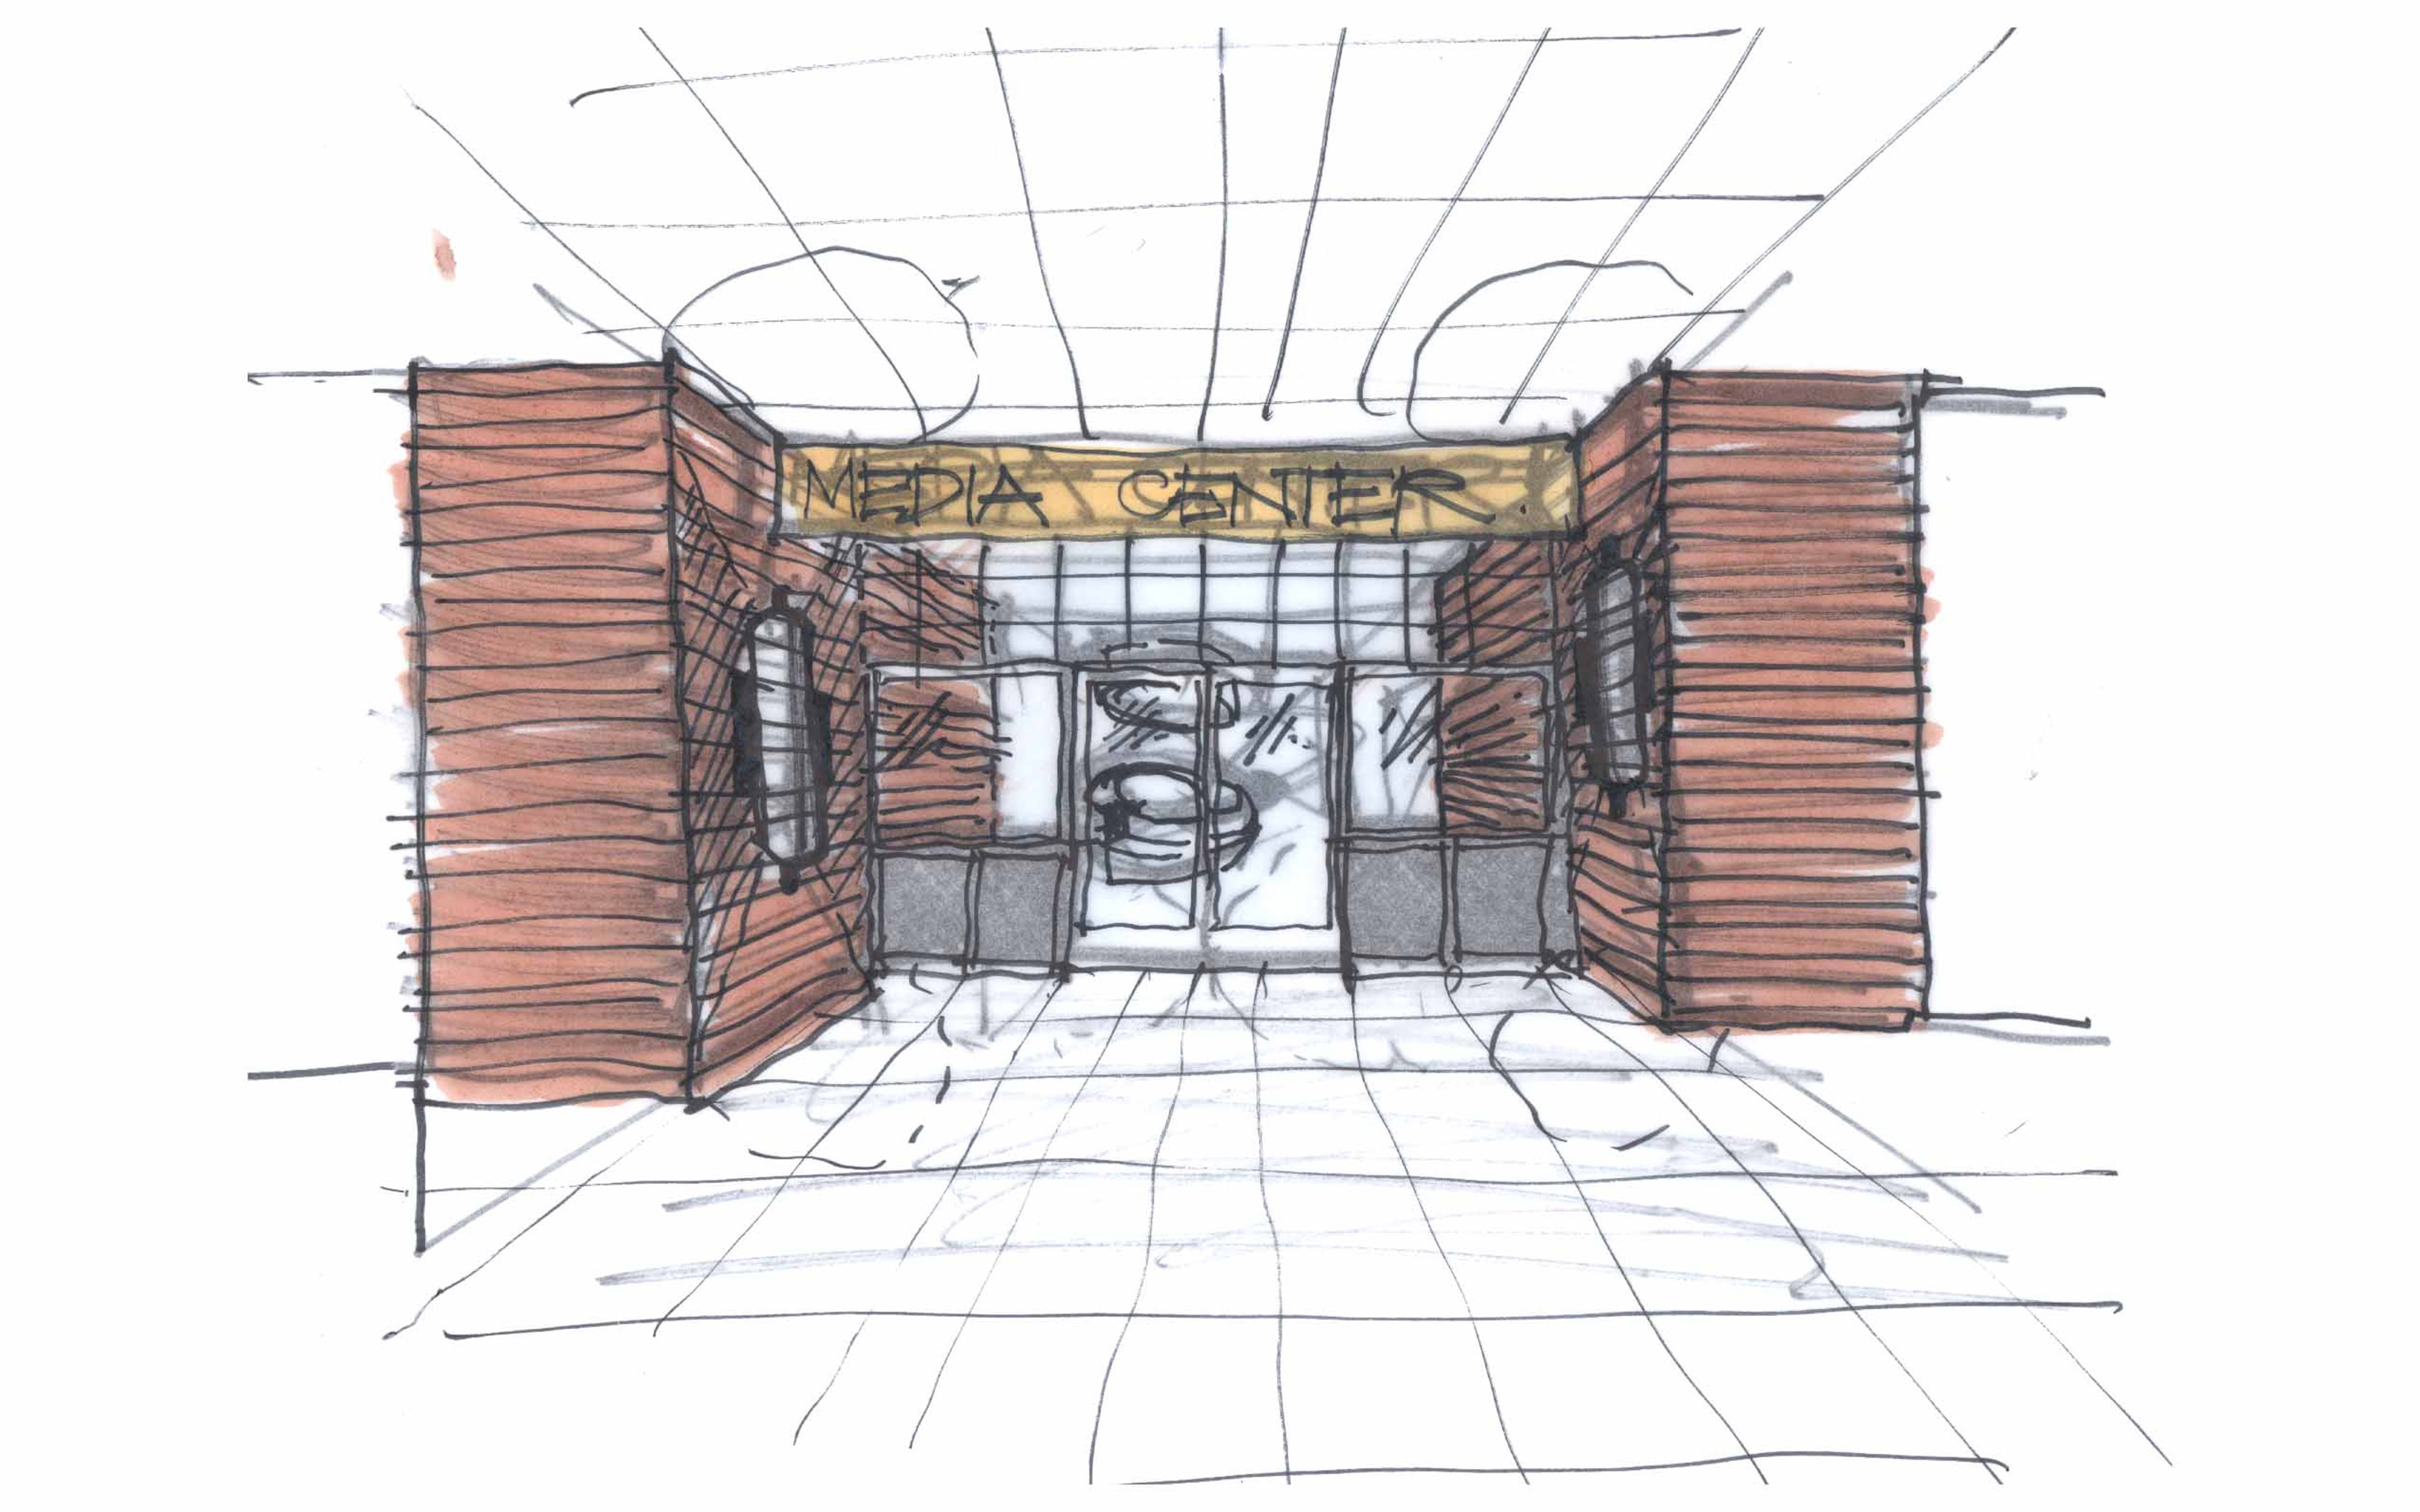 media center entrance sketch